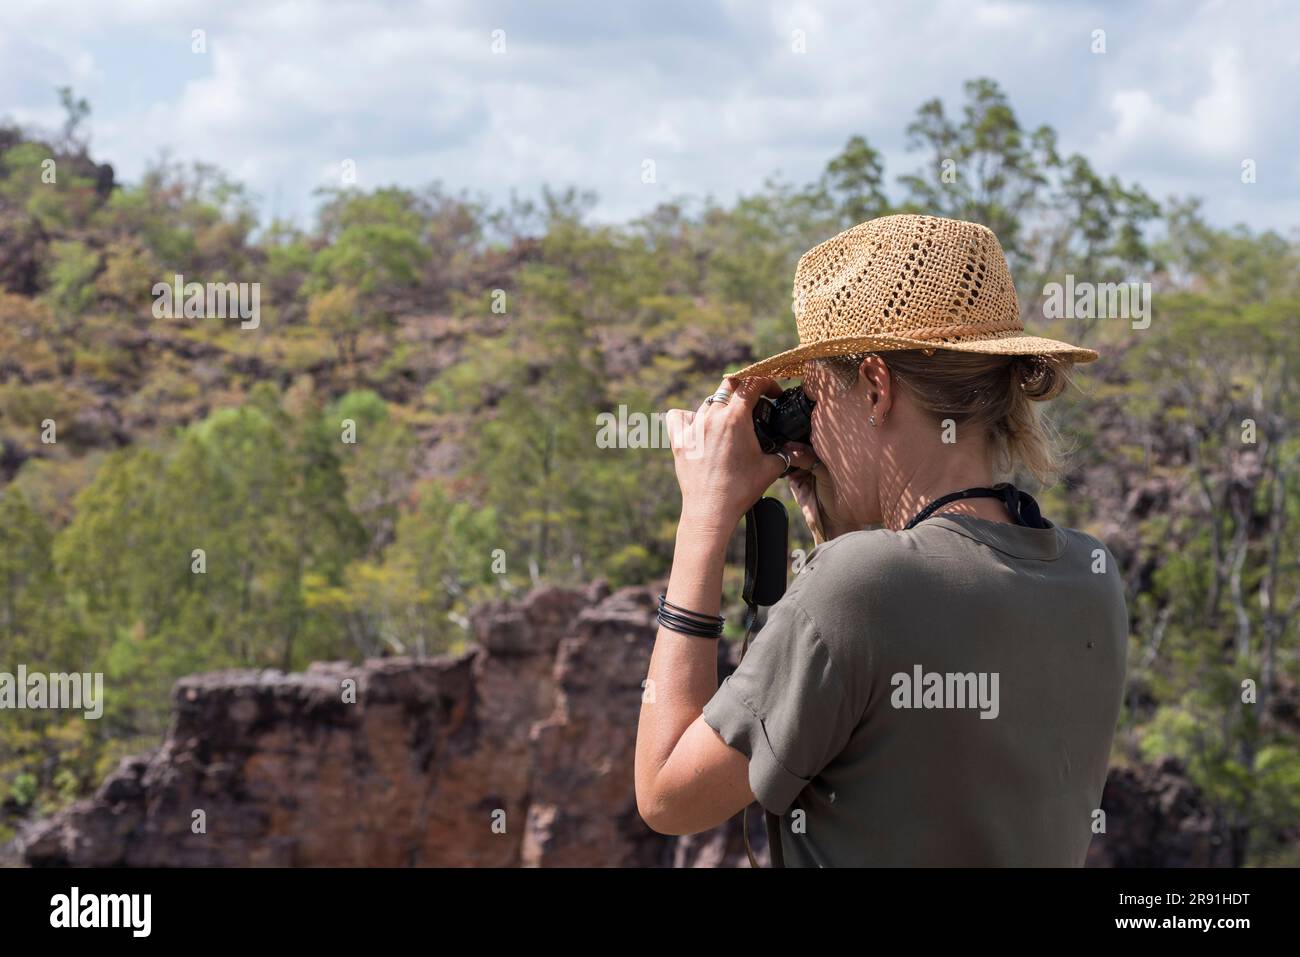 A woman in a sun hat looks at the view through a pair of binoculars near Jabiru in Kakadu National Park in Australia Stock Photo